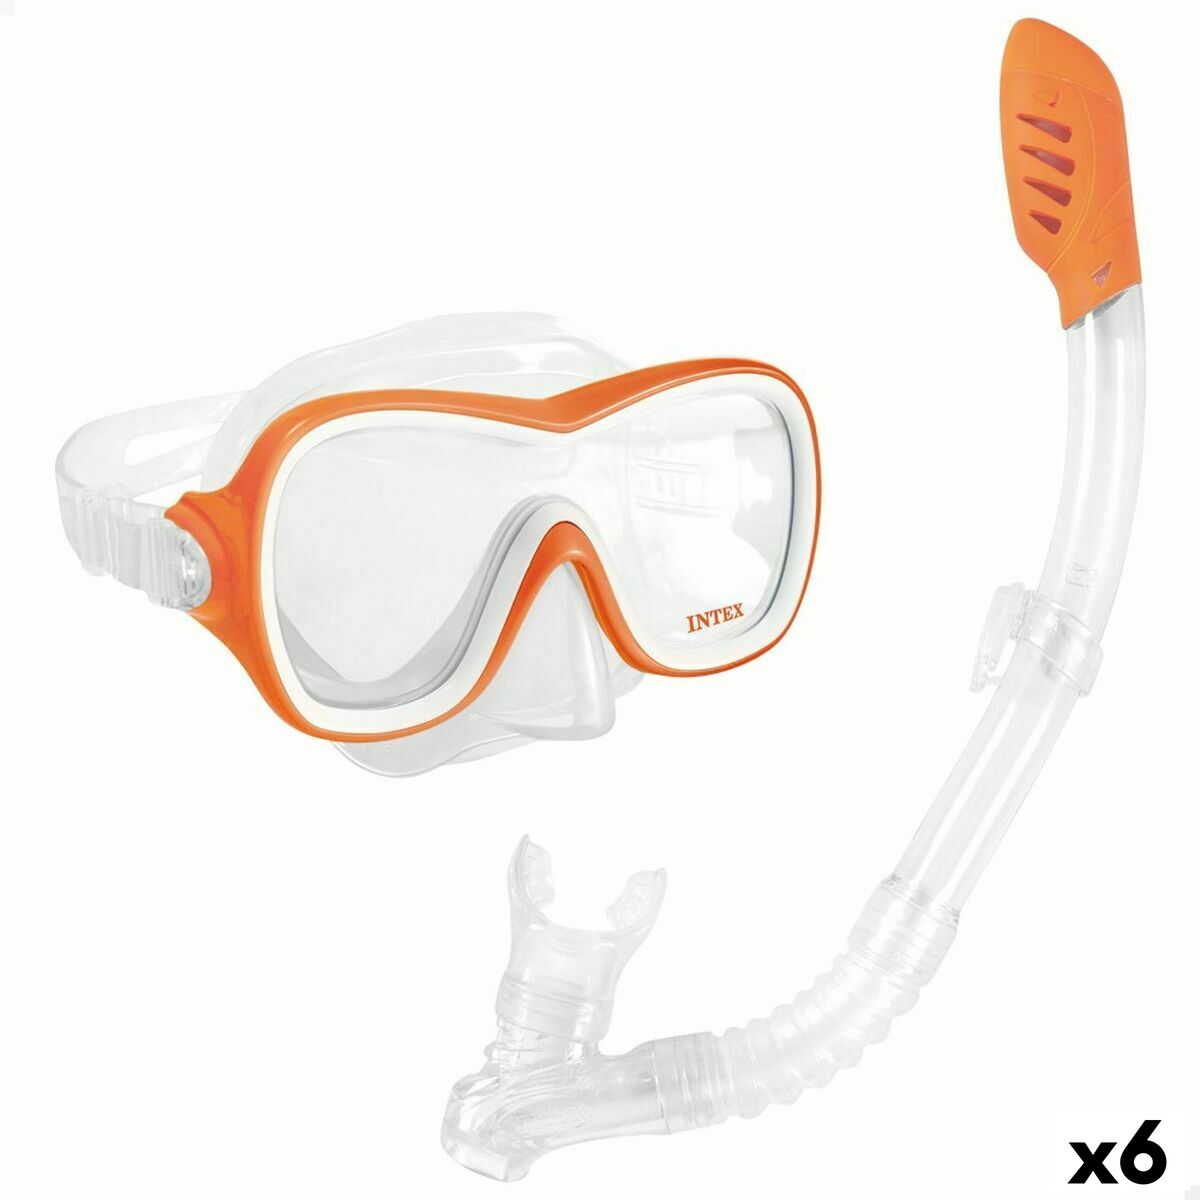 Snorkel Goggles and Tube Intex Wave Rider Orange (6 Units)